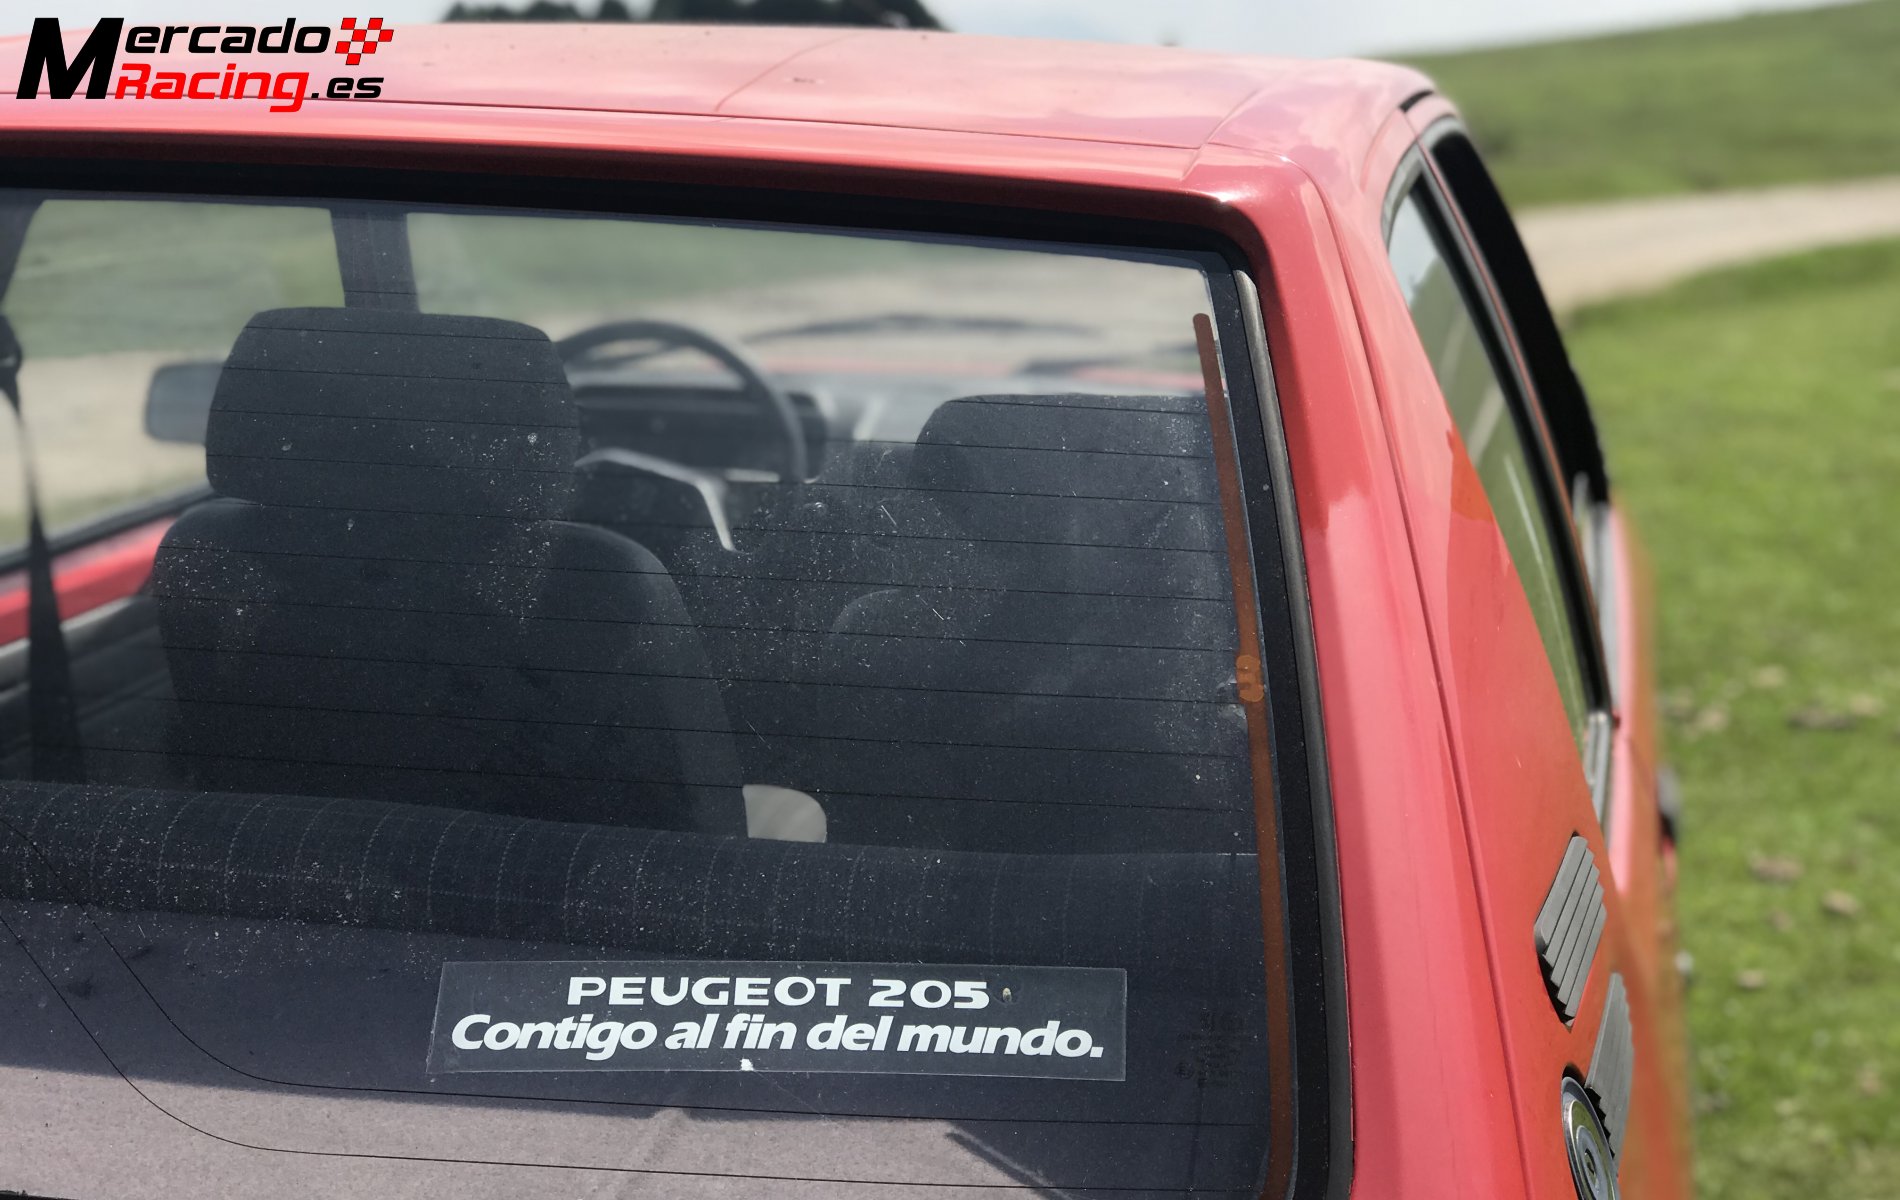 Peugeot 205 xl